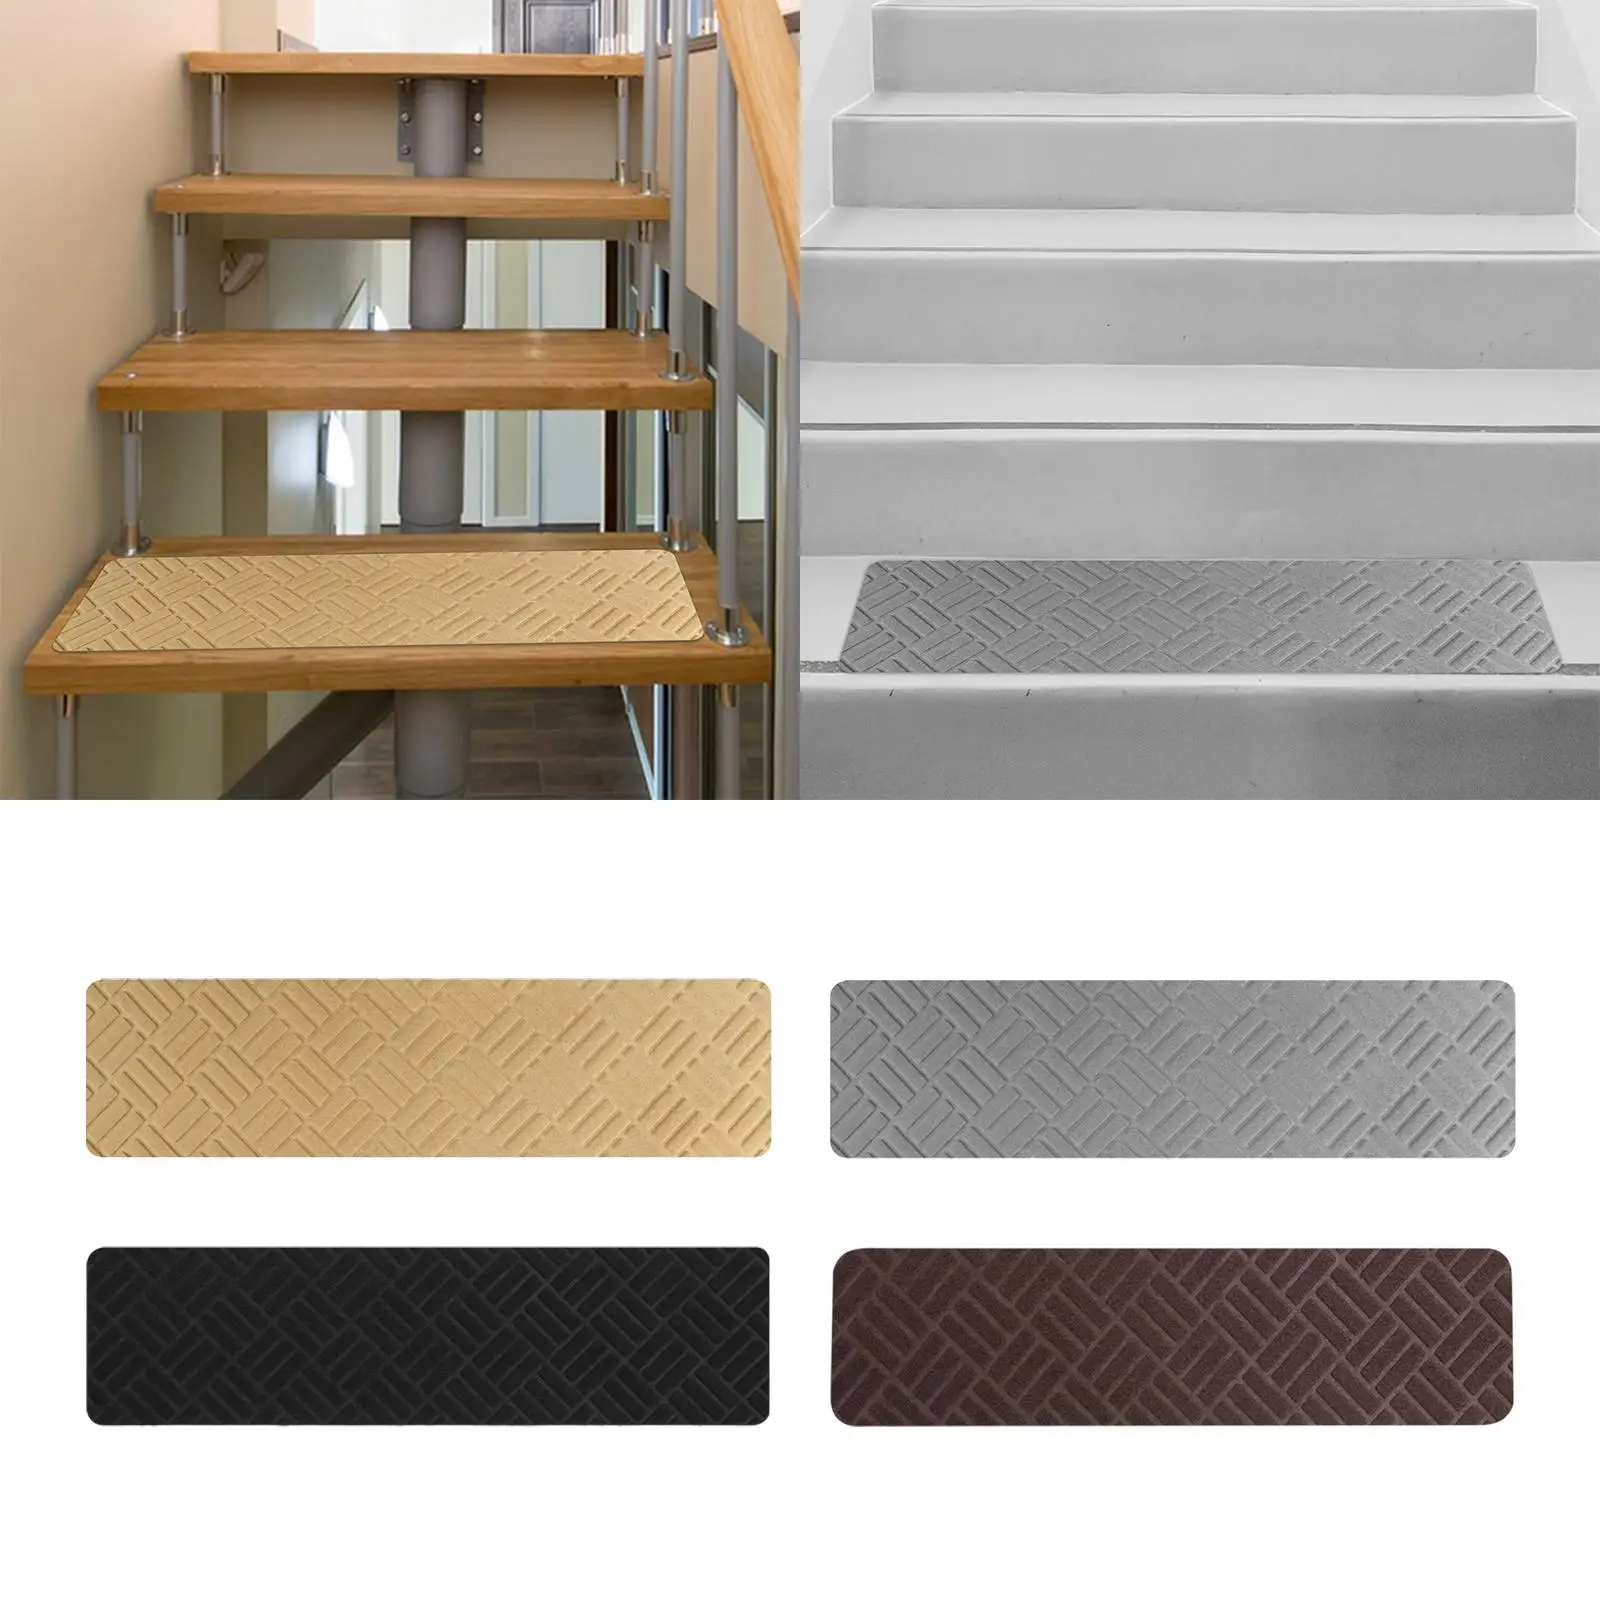 Indoor Stair Rugs Indoor Stair Runners Stair Carpet Treads Strips for Wooden Steps Bedroom Corridor Restaurant Living Room